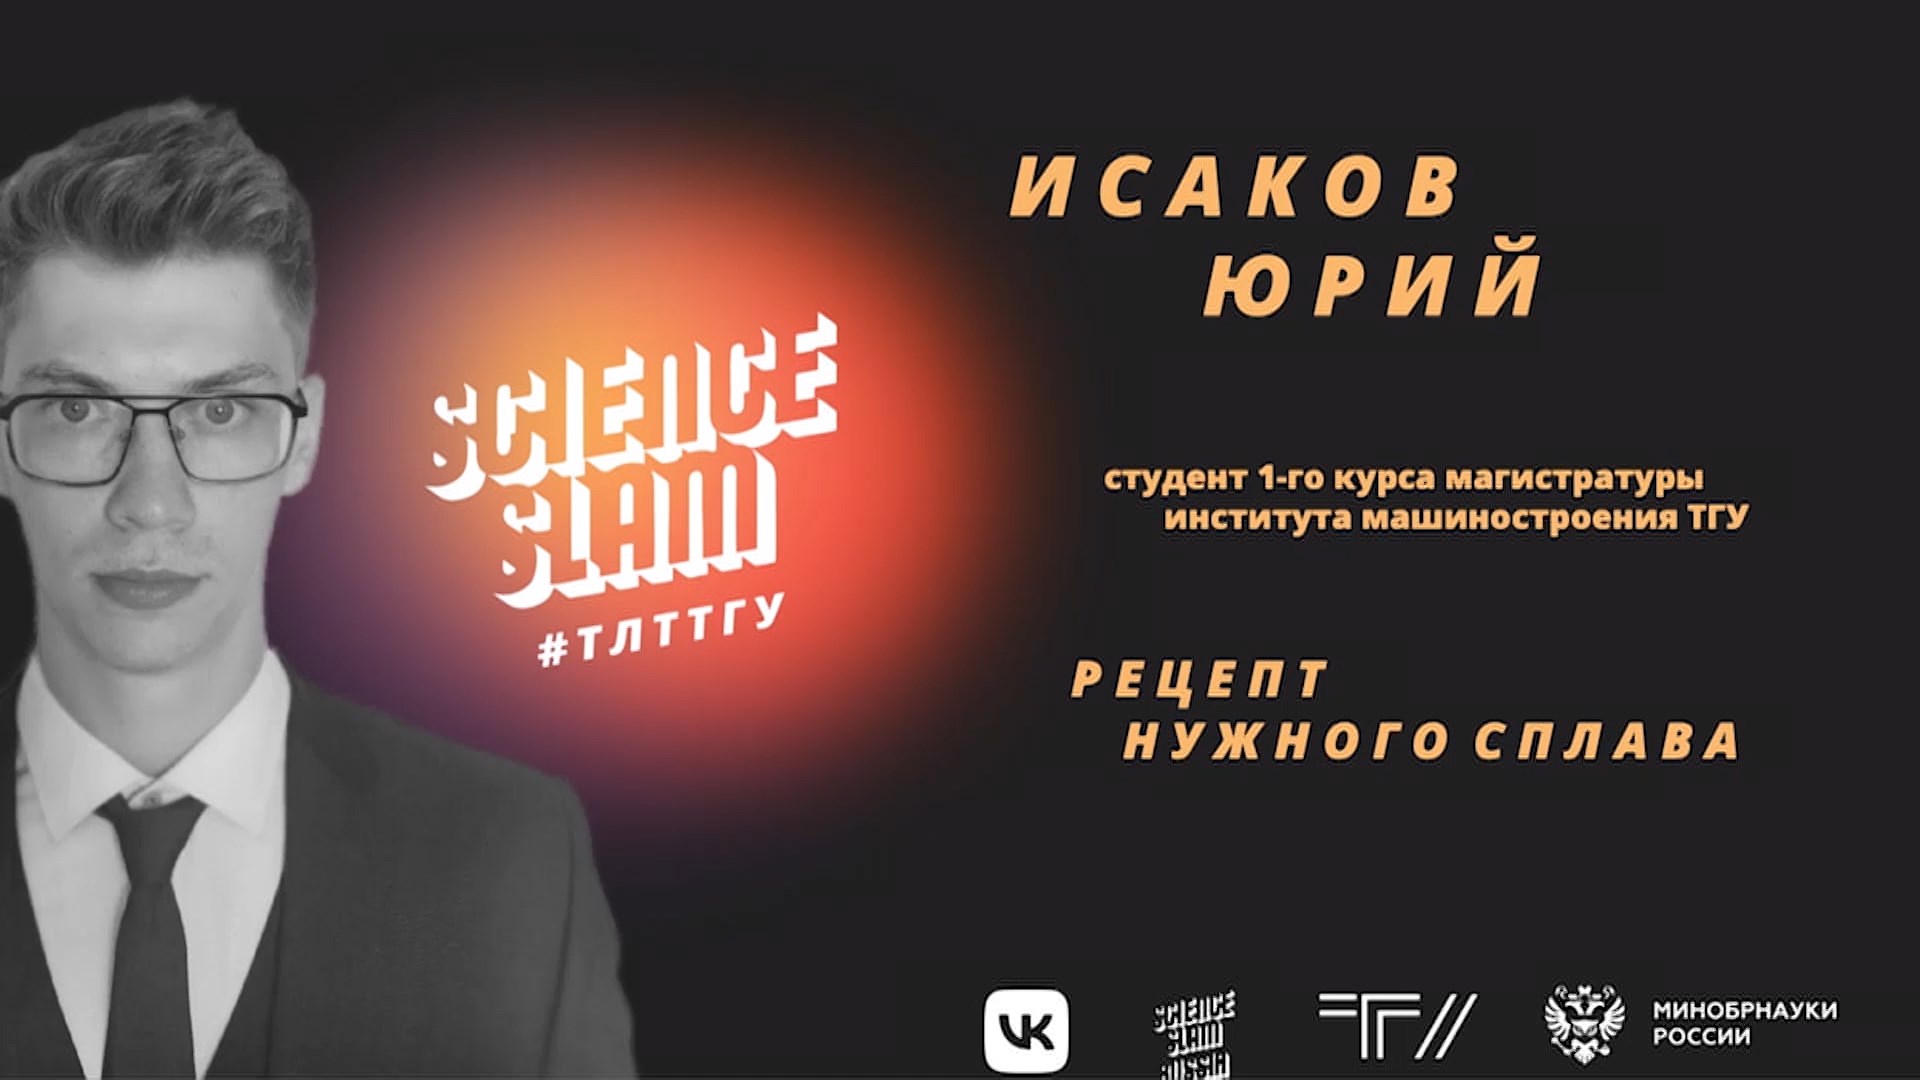 Science Slam #ТЛТТГУ: Юрий Исаков